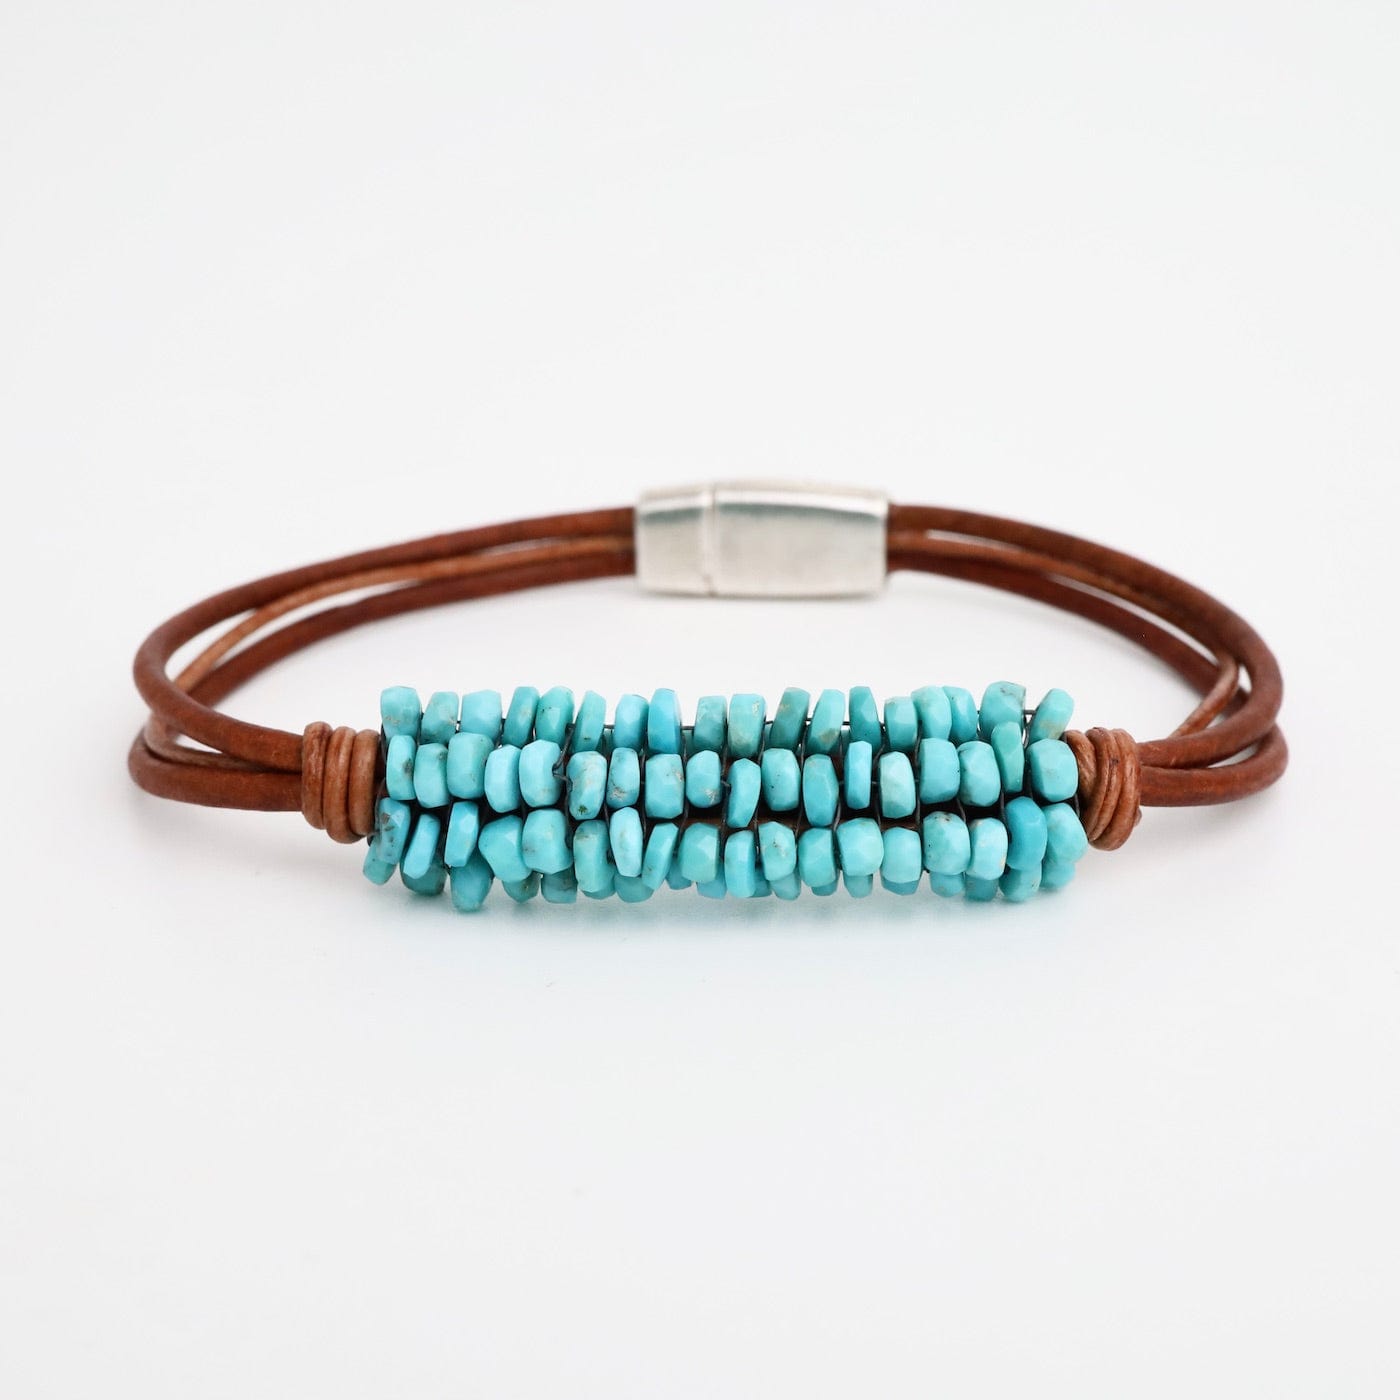 BRC-JM Hand Stitched Sleeping Beauty Turquoise Leather Bracelet